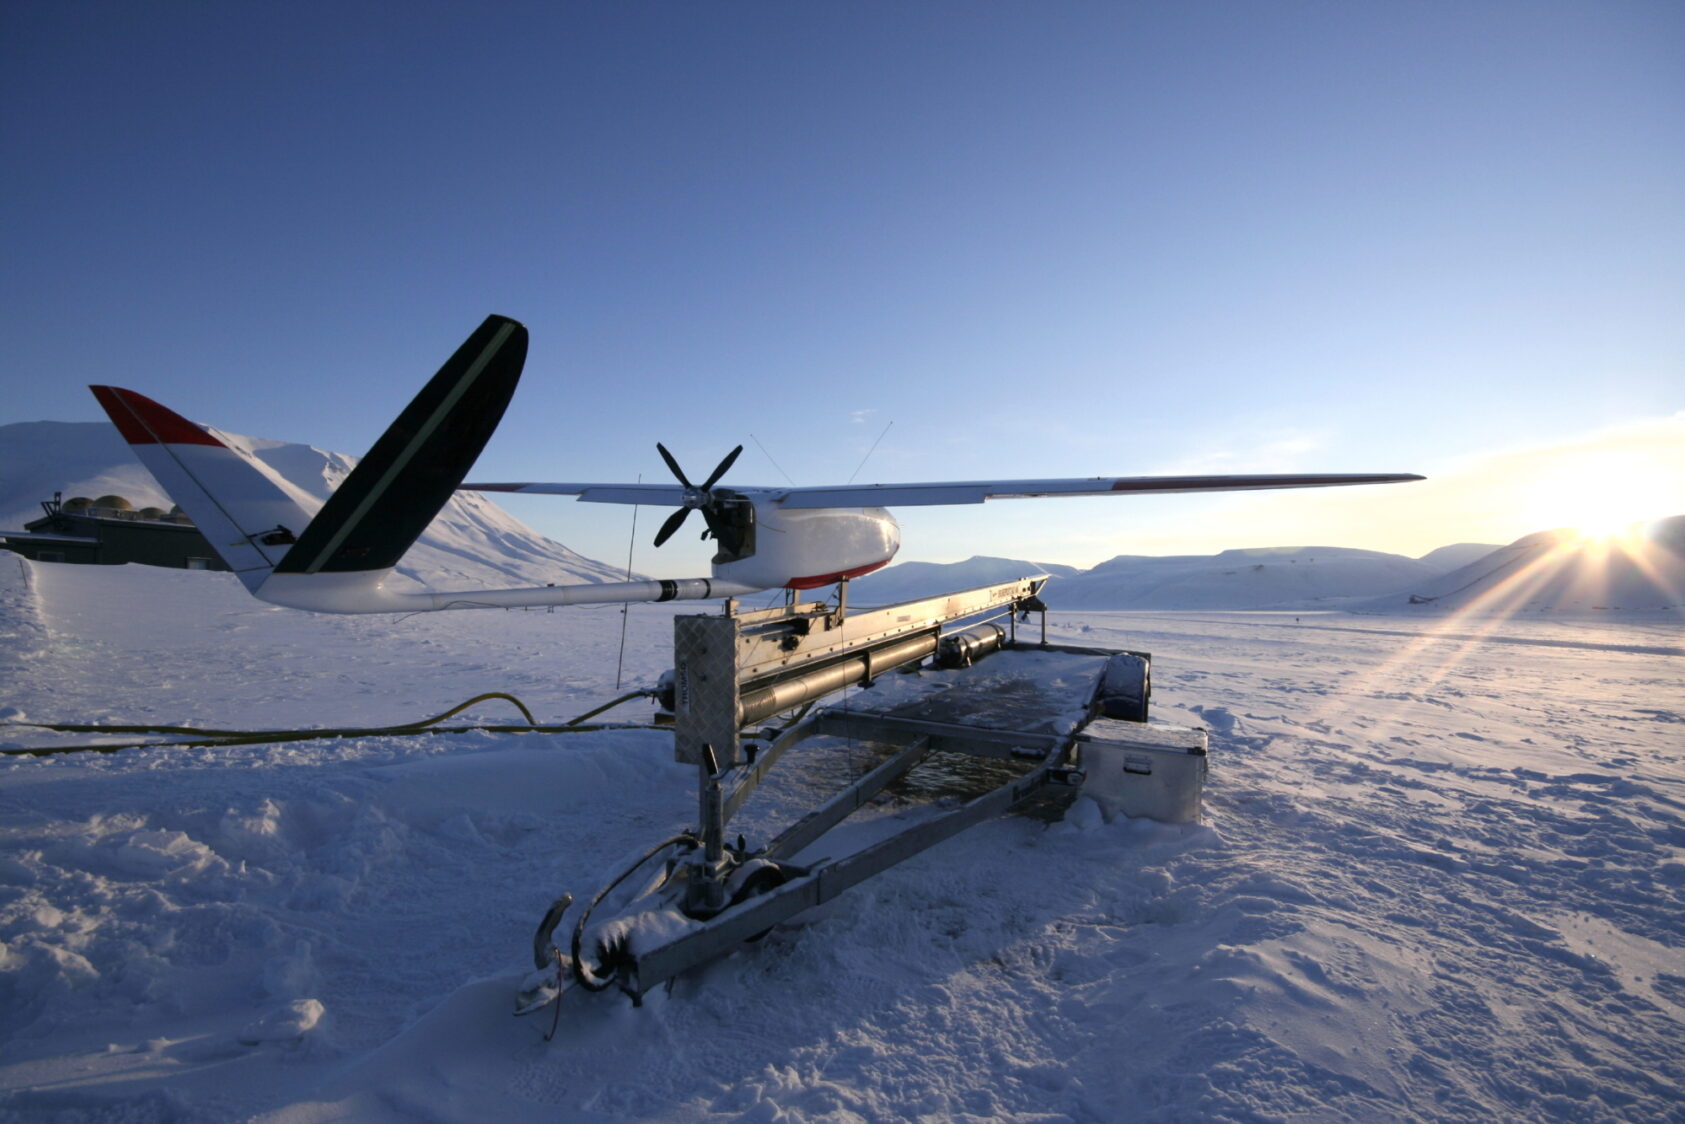 Andreas Tøllefsen, Cryowing Roamer on pneumatic catapult in Adventdalen outside Longyearbyen., Plane on catapult web, , 